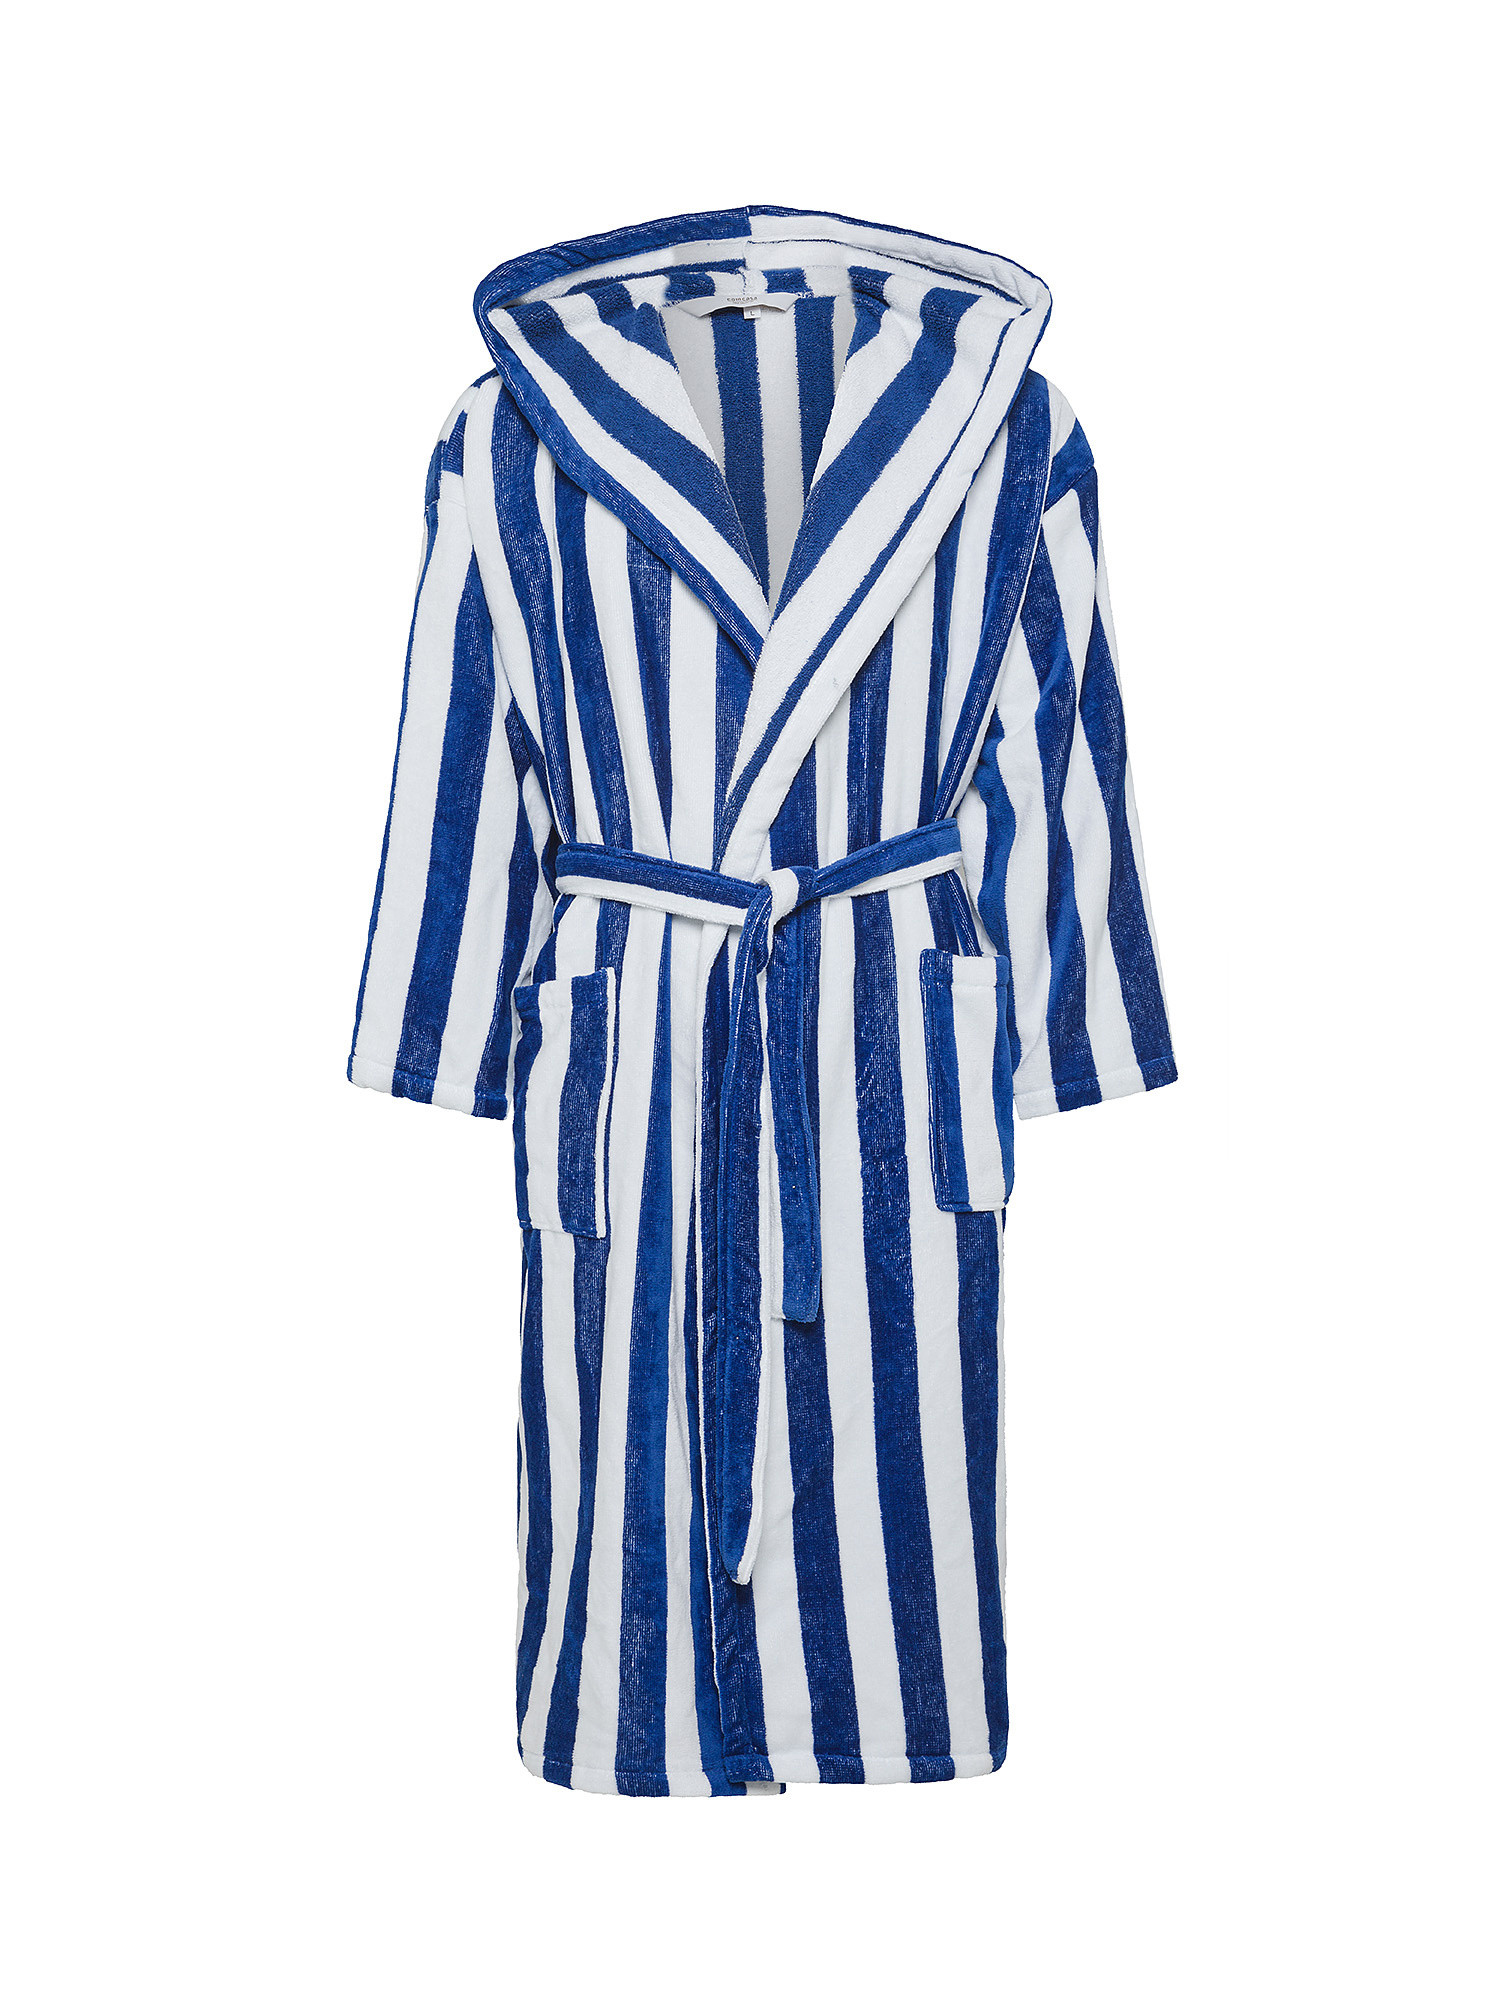 Cotton velor bathrobe with sailor stripes motif, Blue, large image number 0